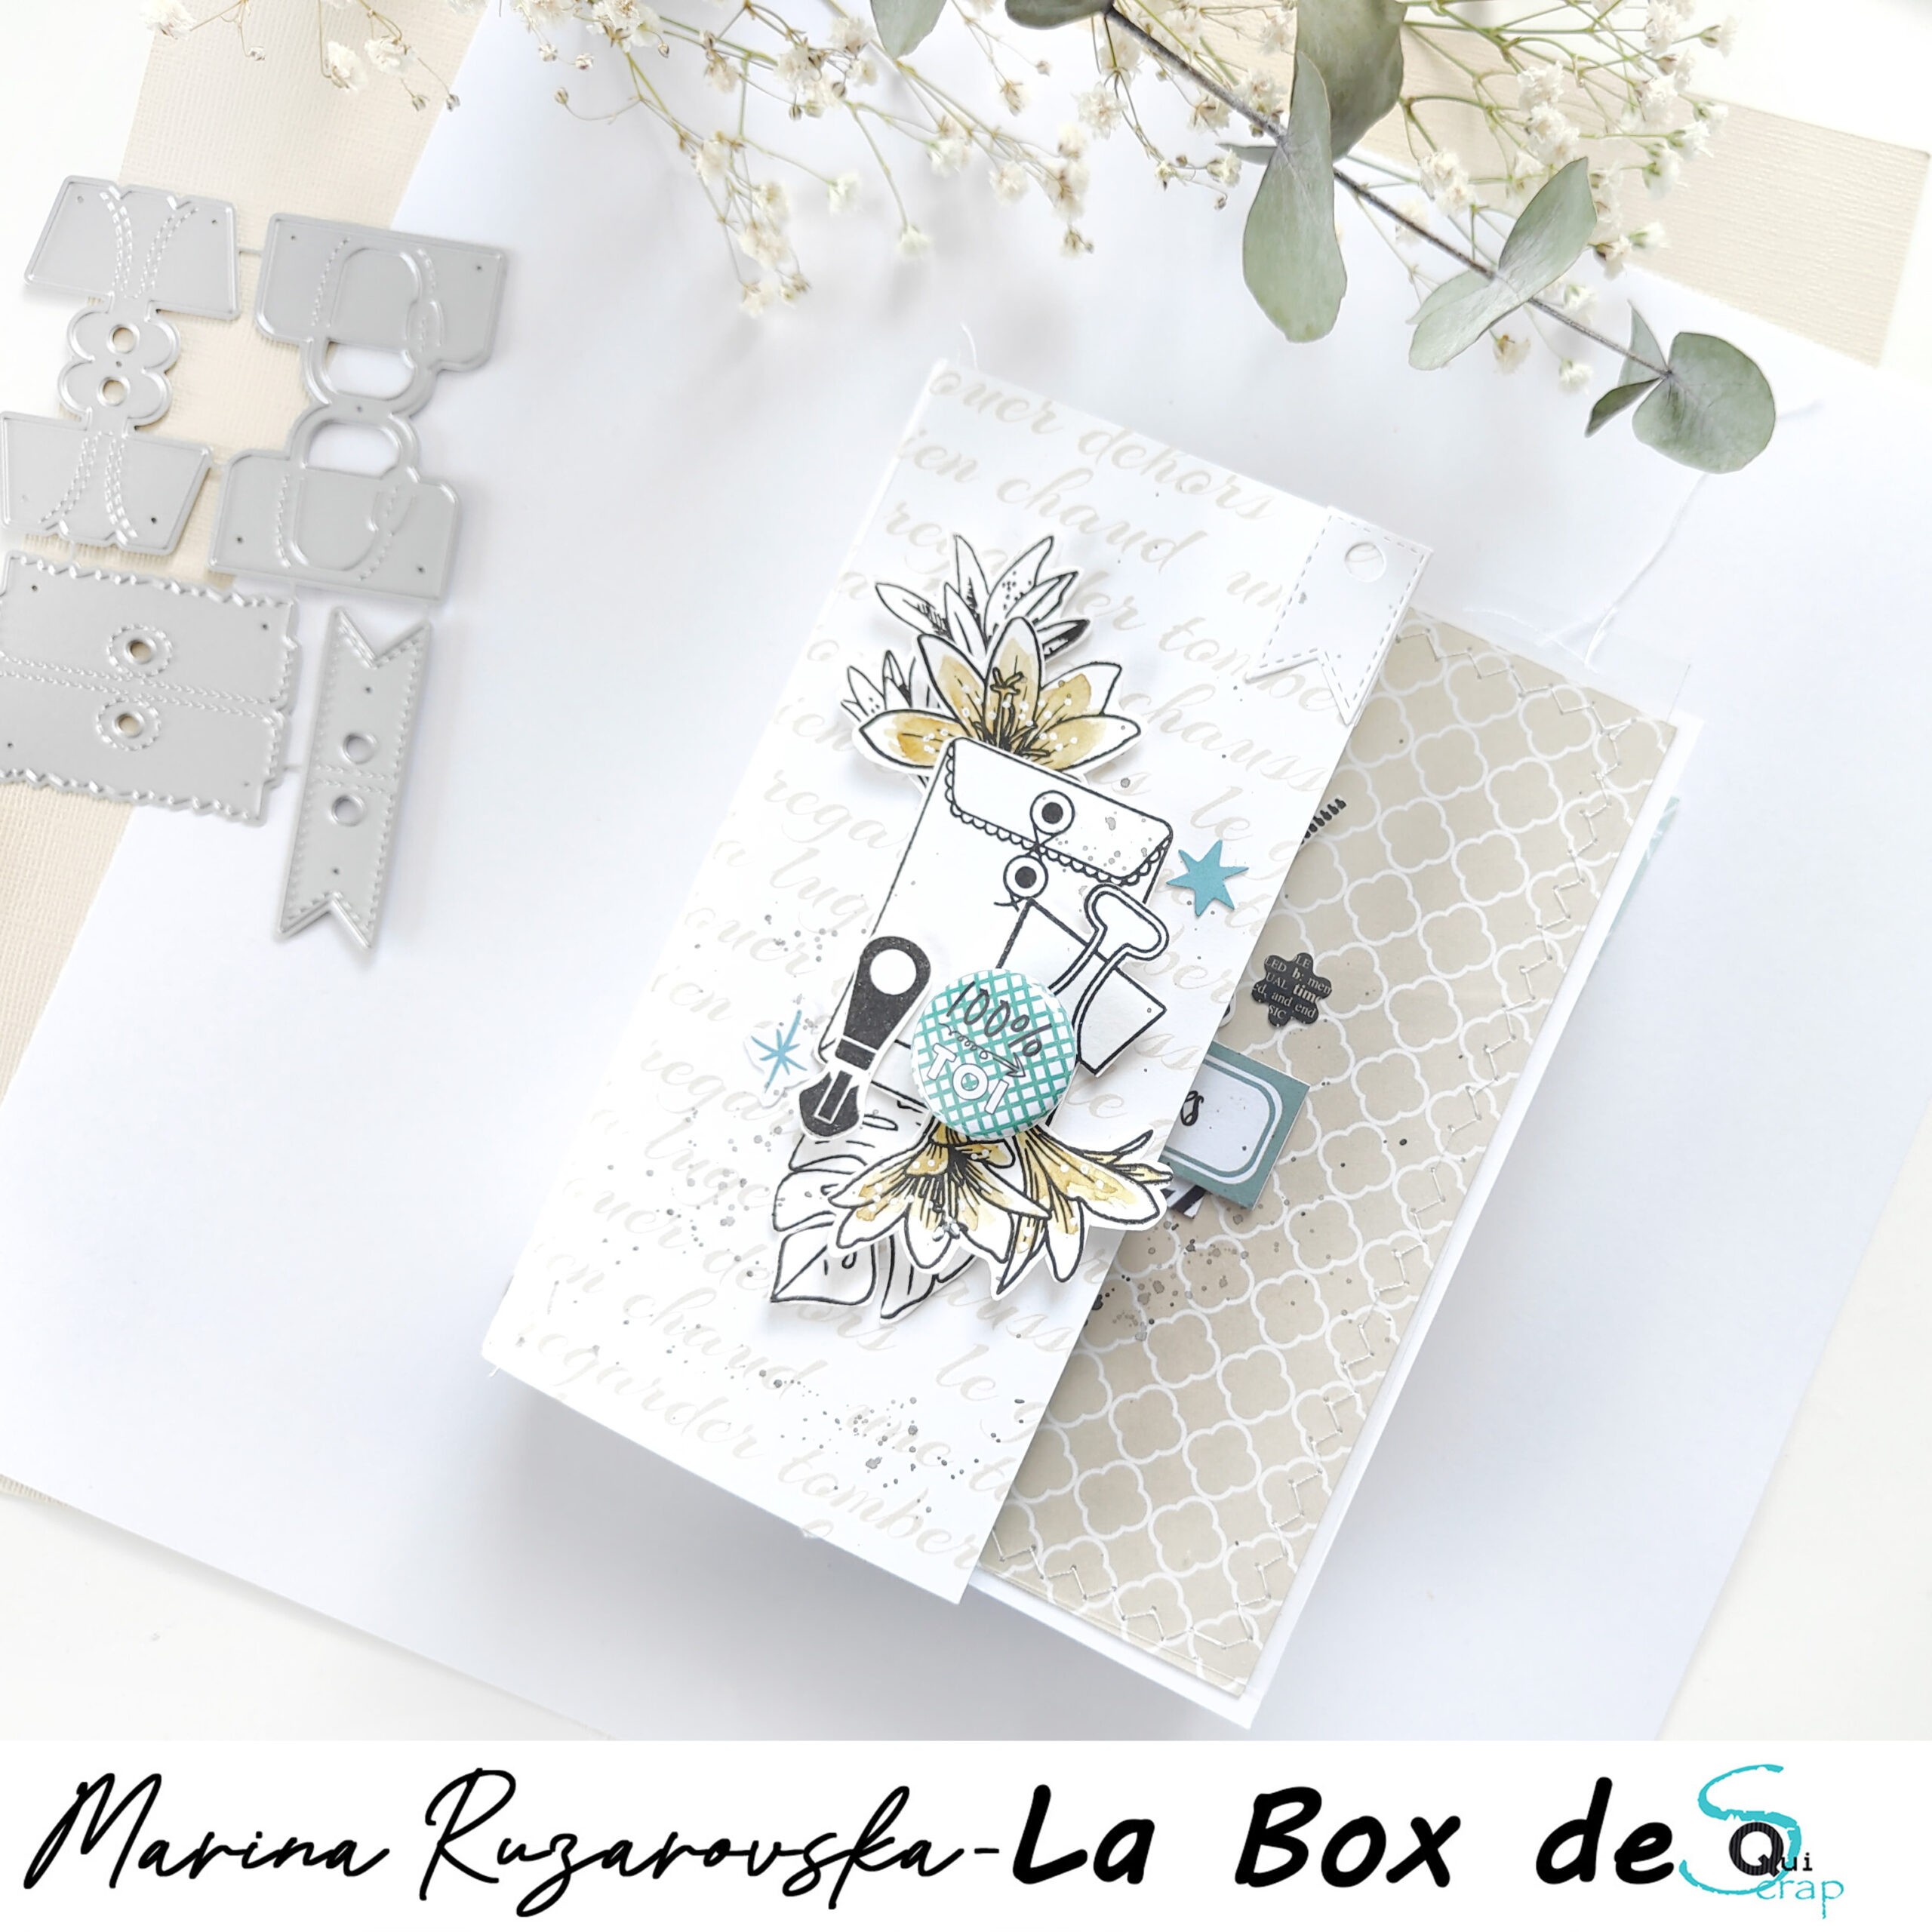 You are currently viewing Tuto n°3 pour la Box de Mars 2023 par Marina Ruzarovska: le minialbum 100% TOI